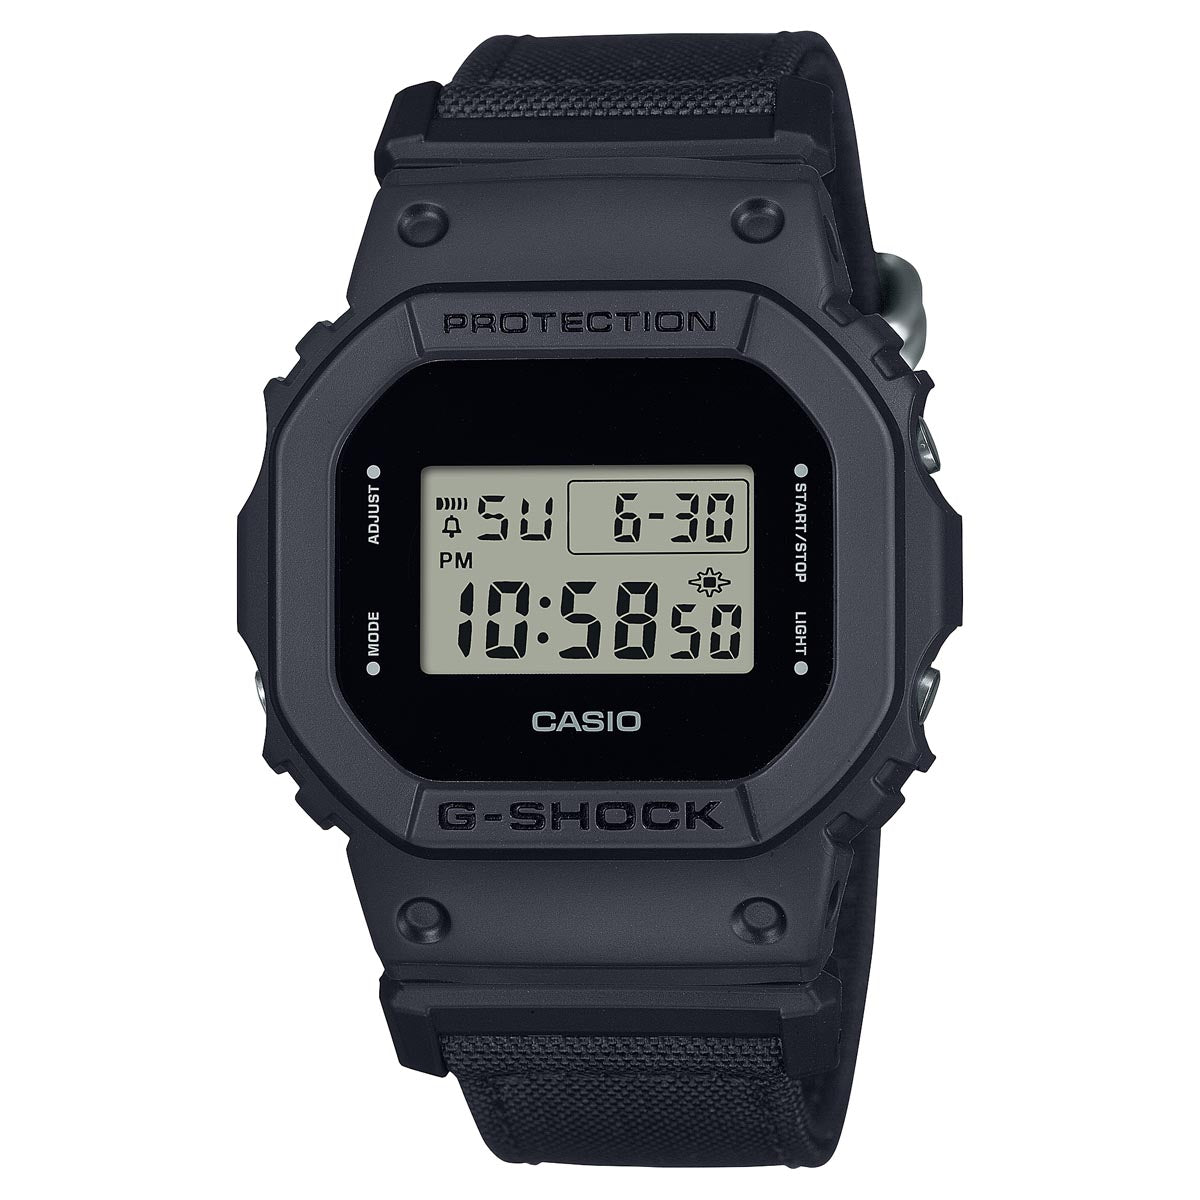 G-Shock DW5600BCE-1 Watch - Black image 1